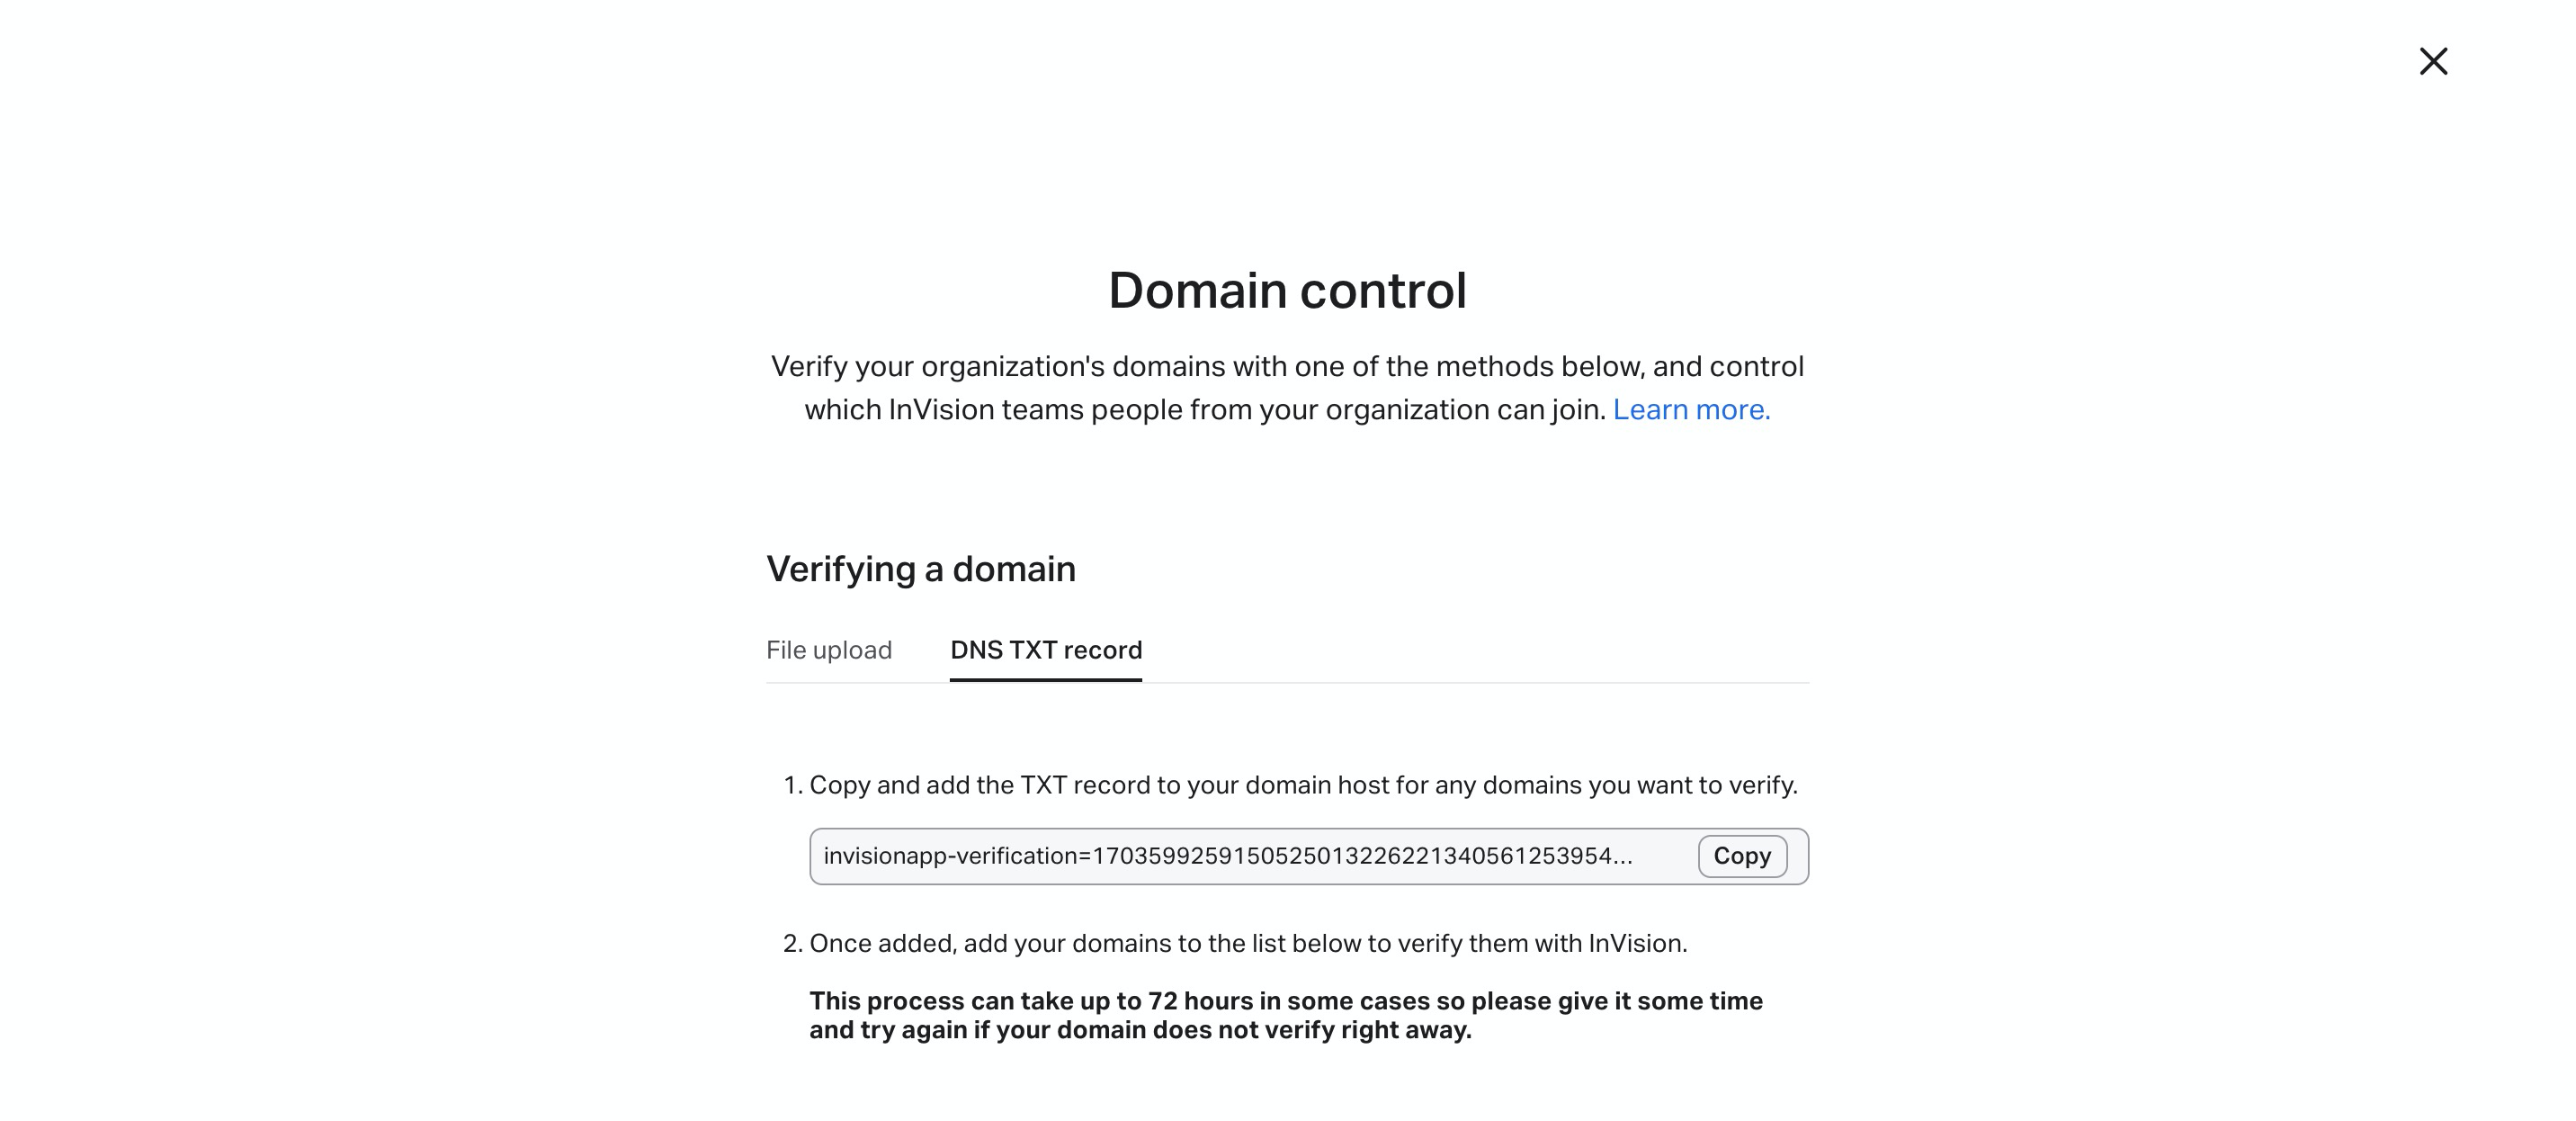 invision-v7-settings-domain-control-dns-txt-record.jpg